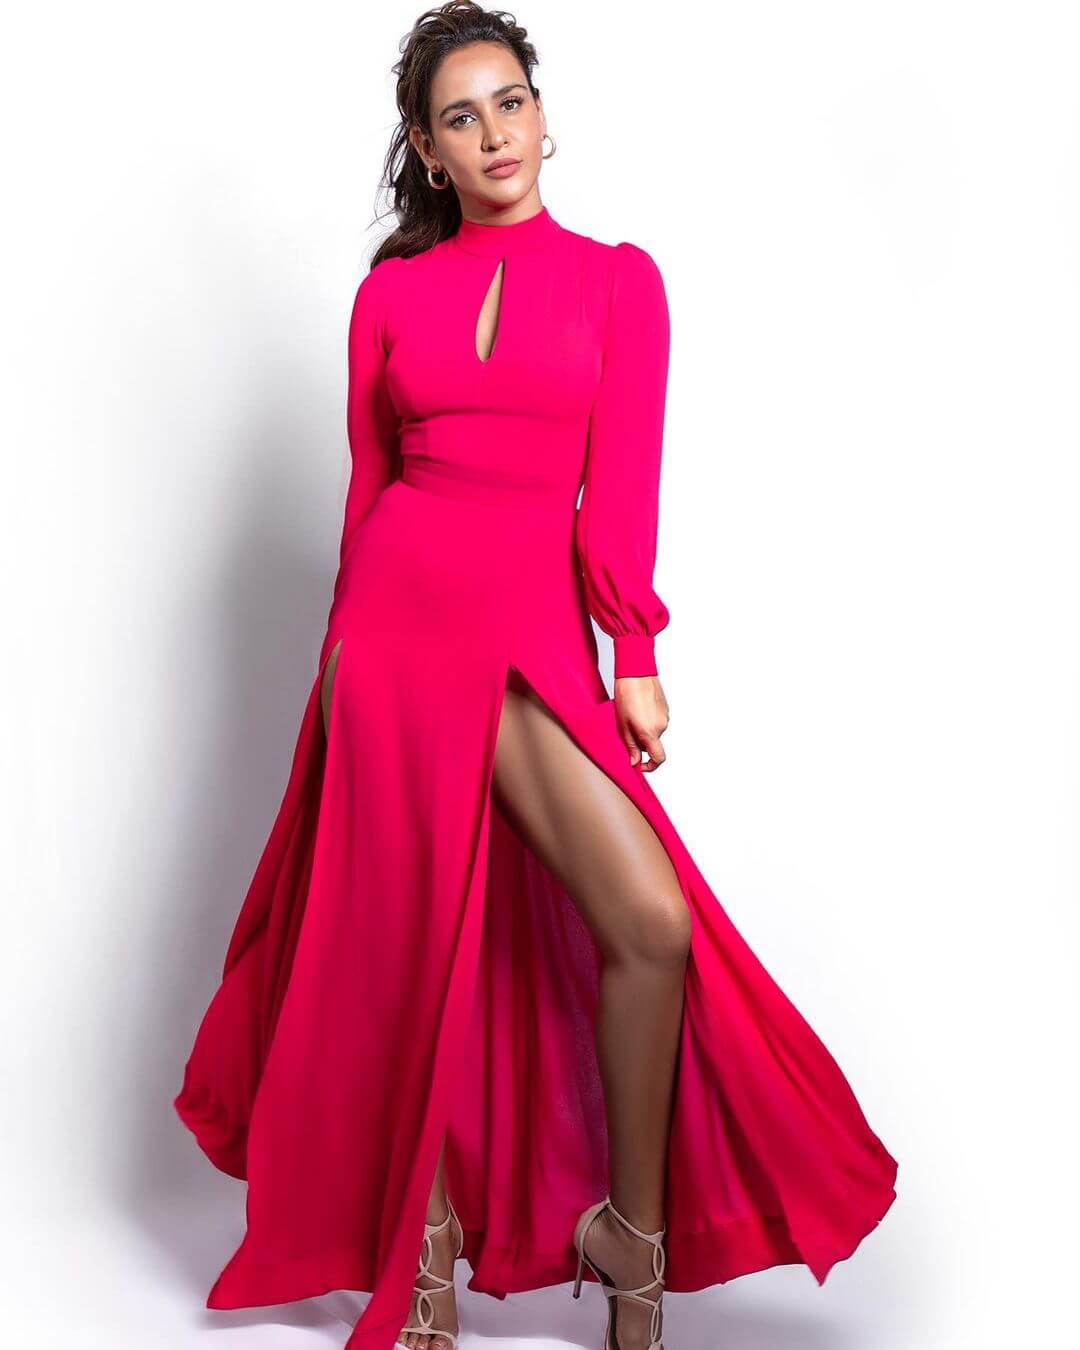 Aisha Sharma Look Beautiful In Pink Full Sleeves Gown